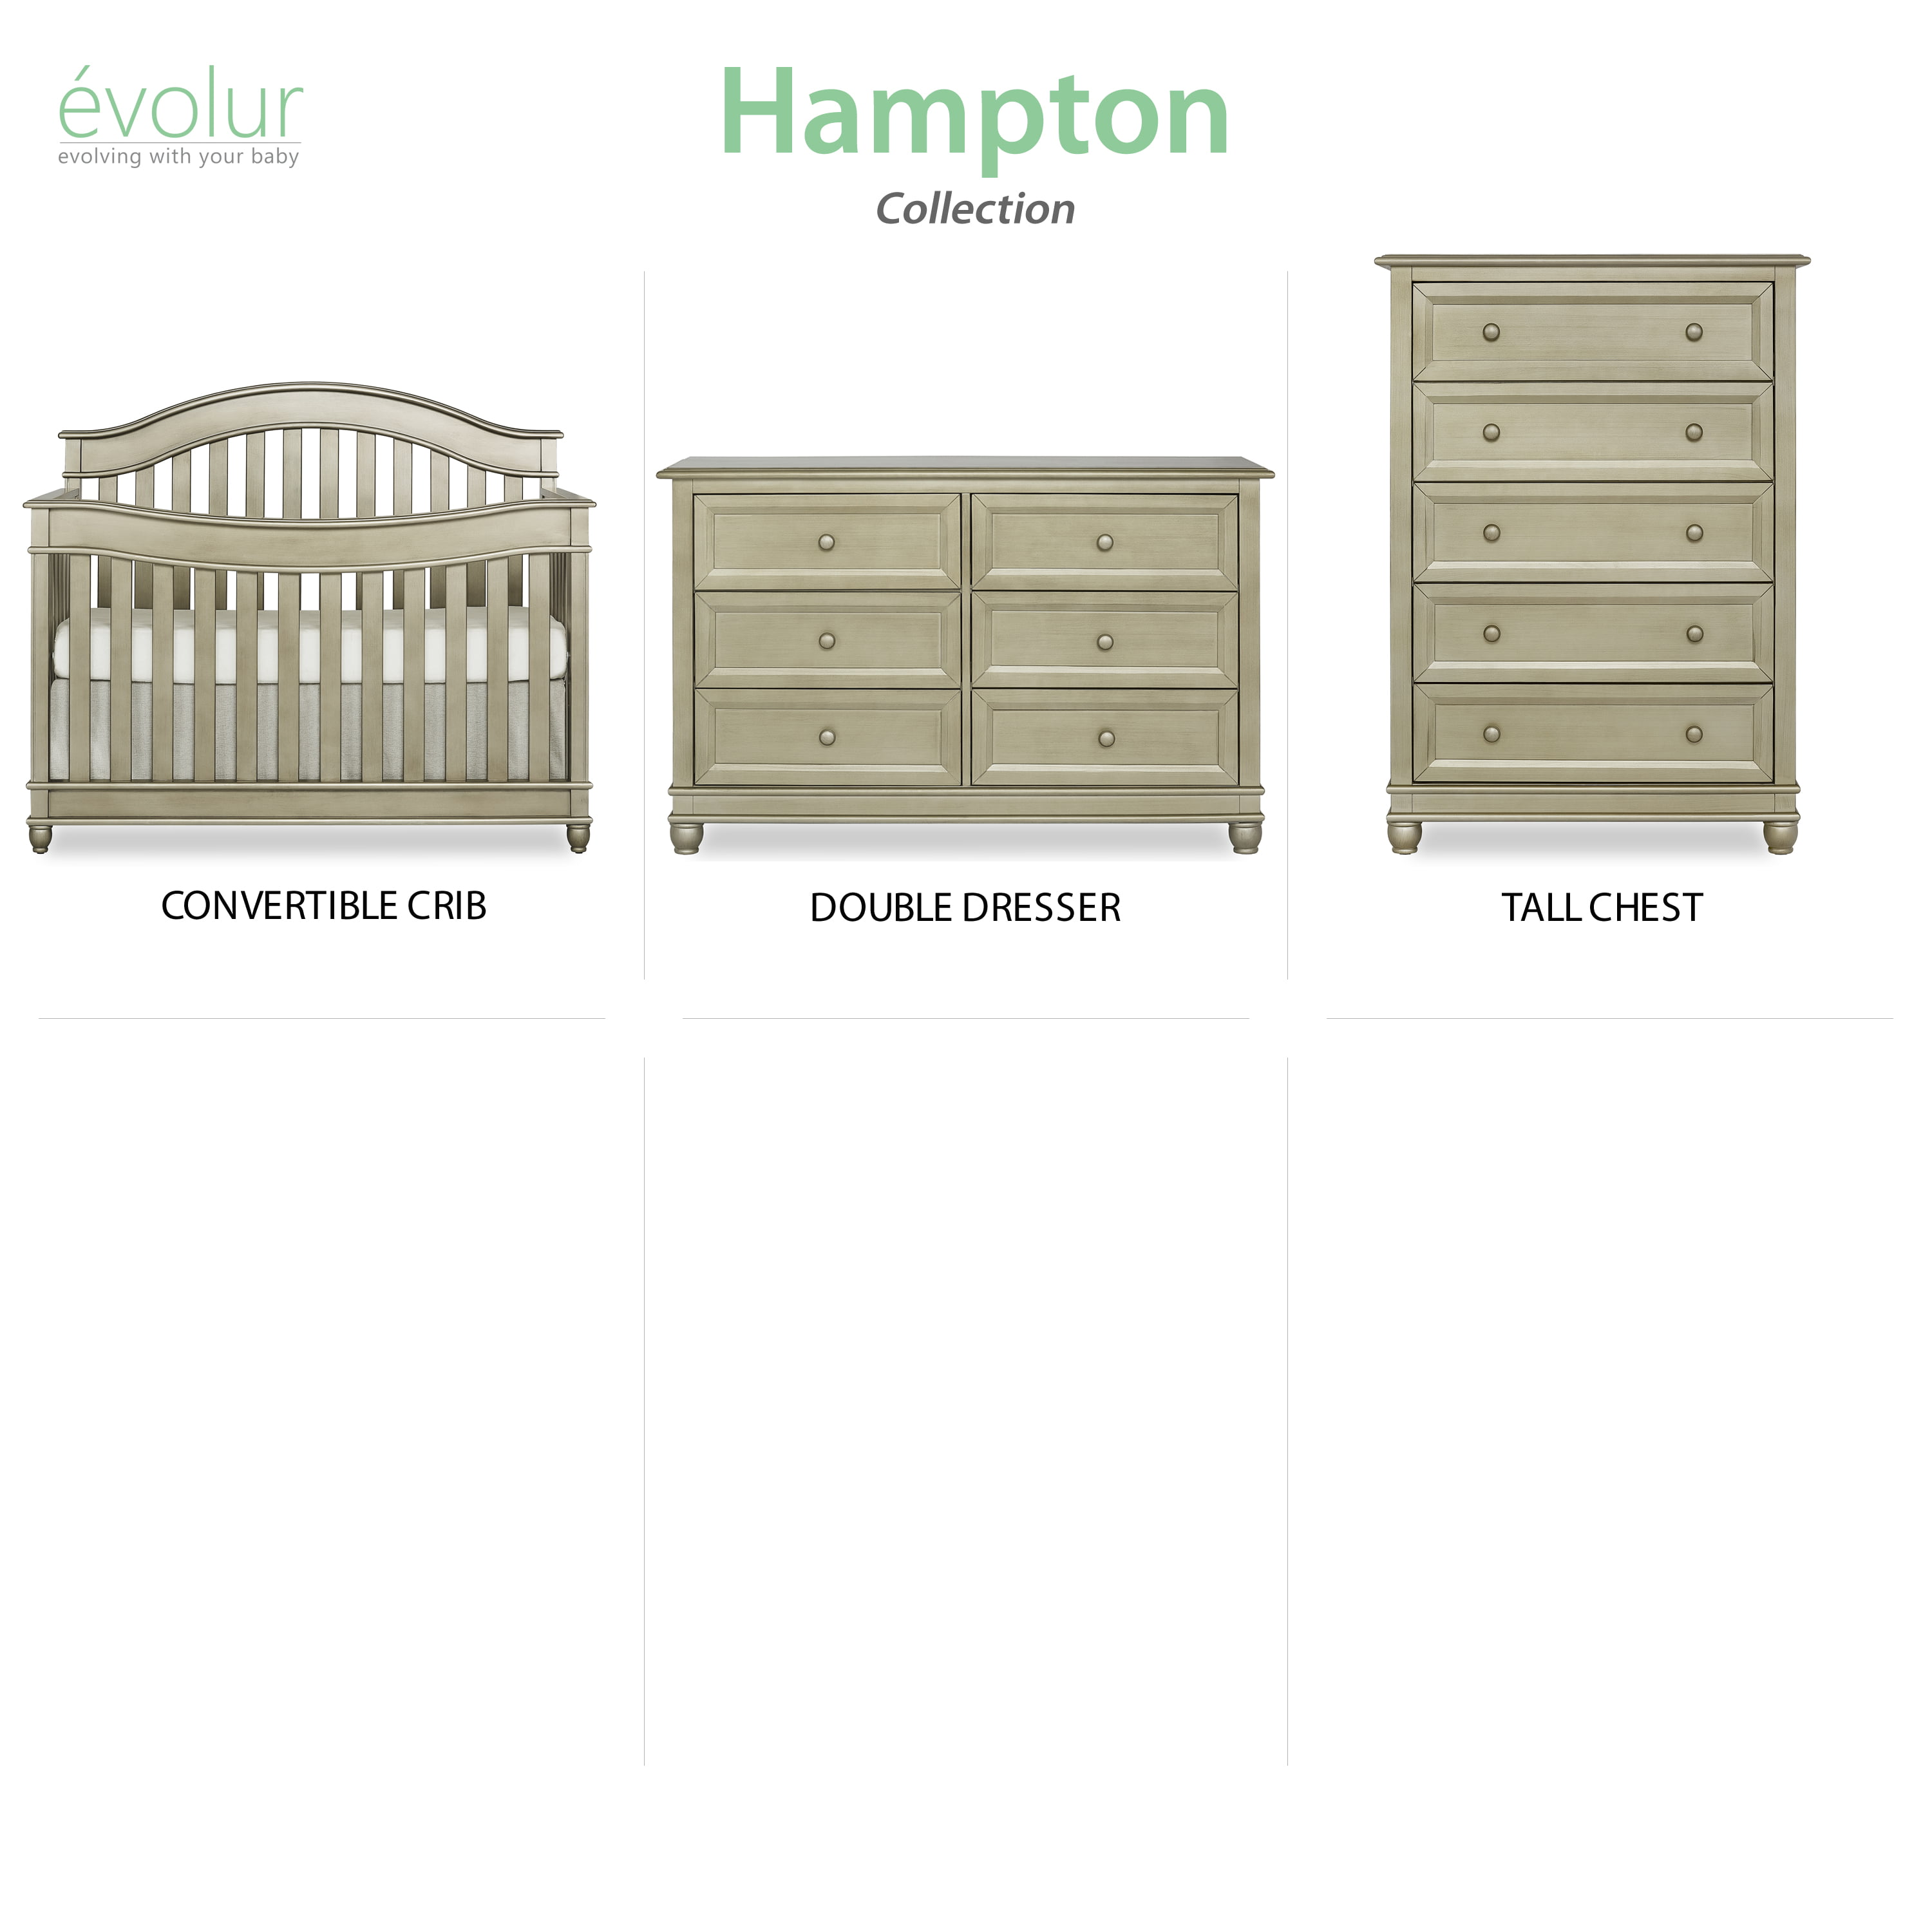 evolur hampton crib